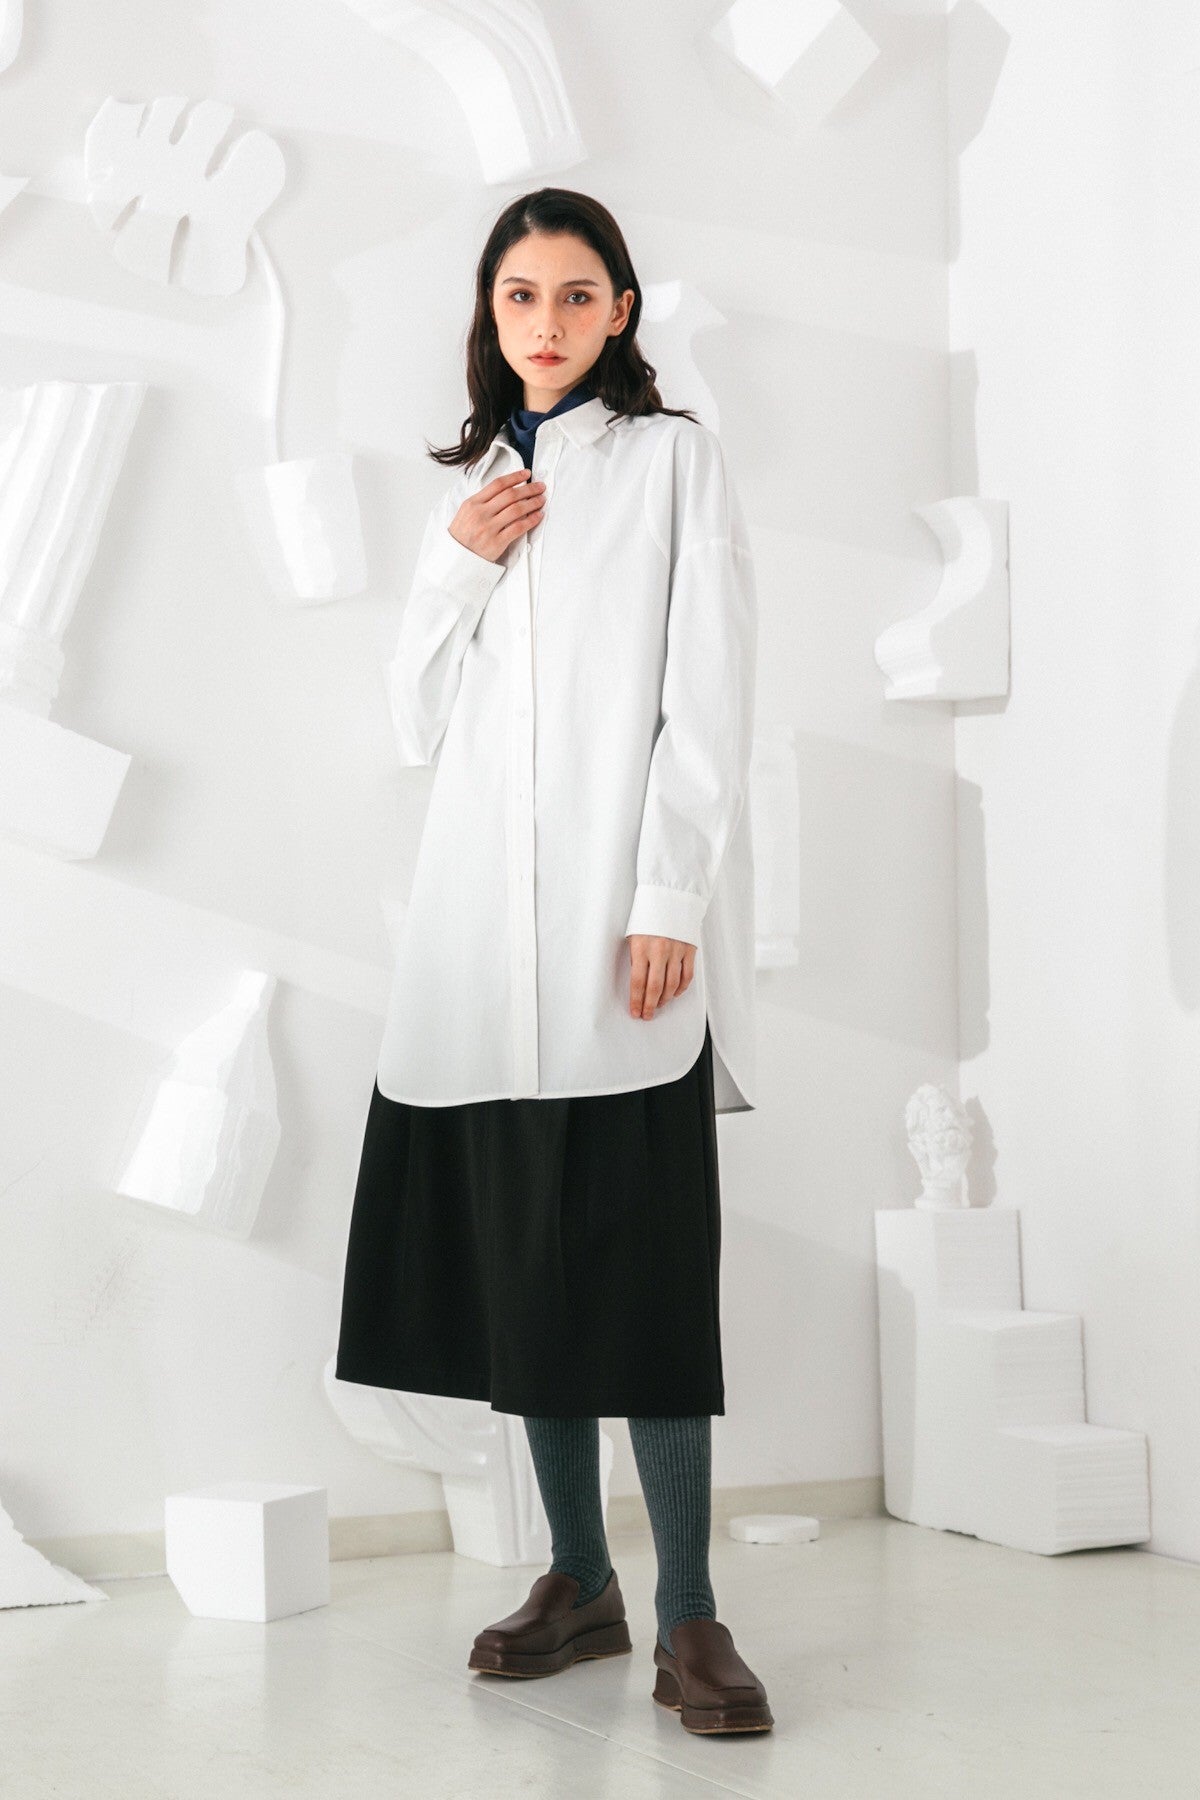 SKYE San Francisco SF shop ethical modern minimalist quality women clothing fashion Brigitte Tunic Shirt white